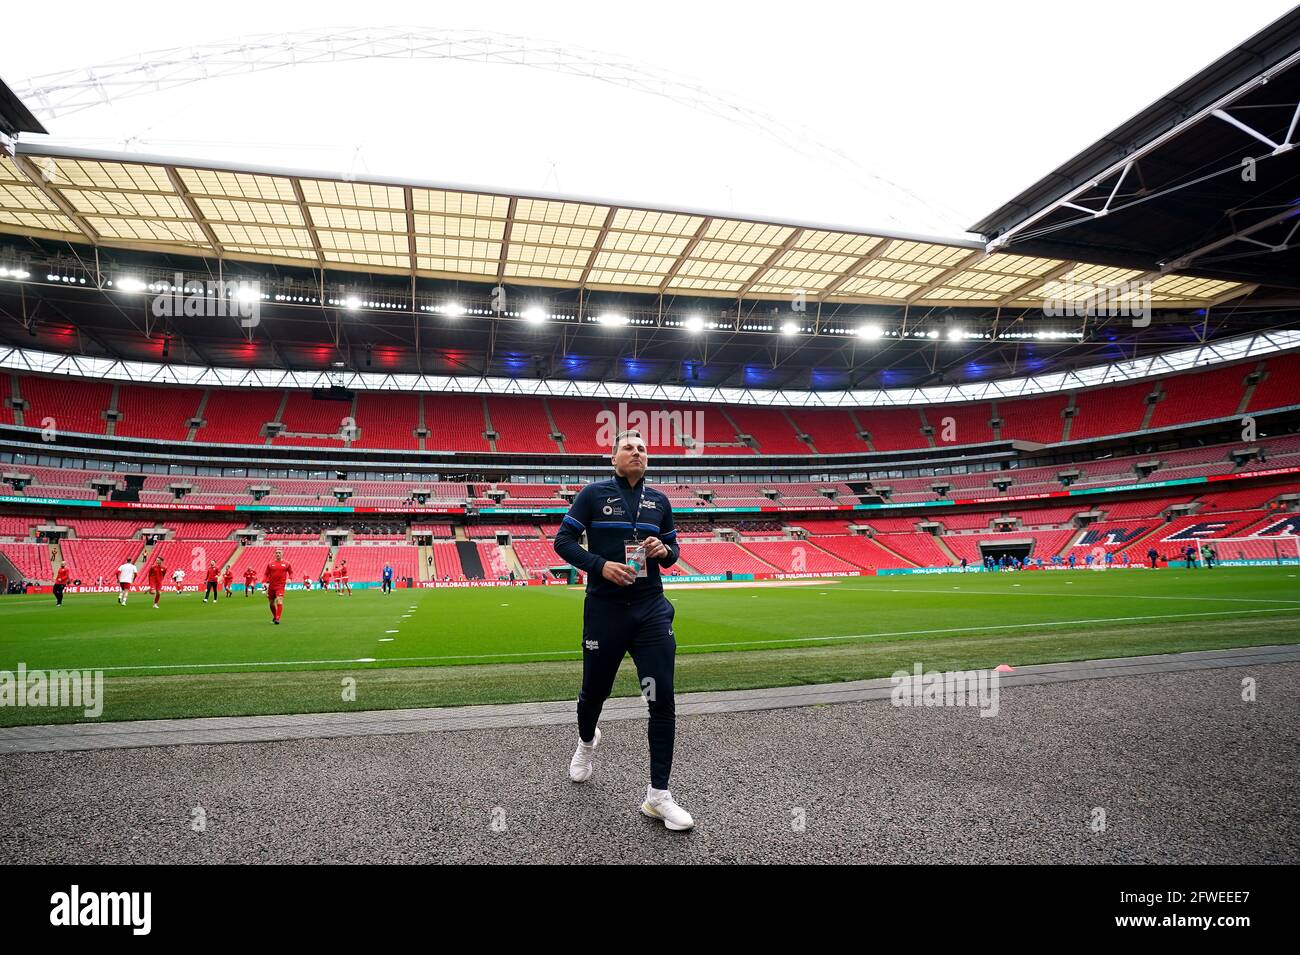 Binfield-Joint-Manager Carl Withers vor dem Finale der Buildbase FA Vase 2020/21 im Wembley Stadium, London. Bilddatum: Samstag, 22. Mai 2021. Stockfoto